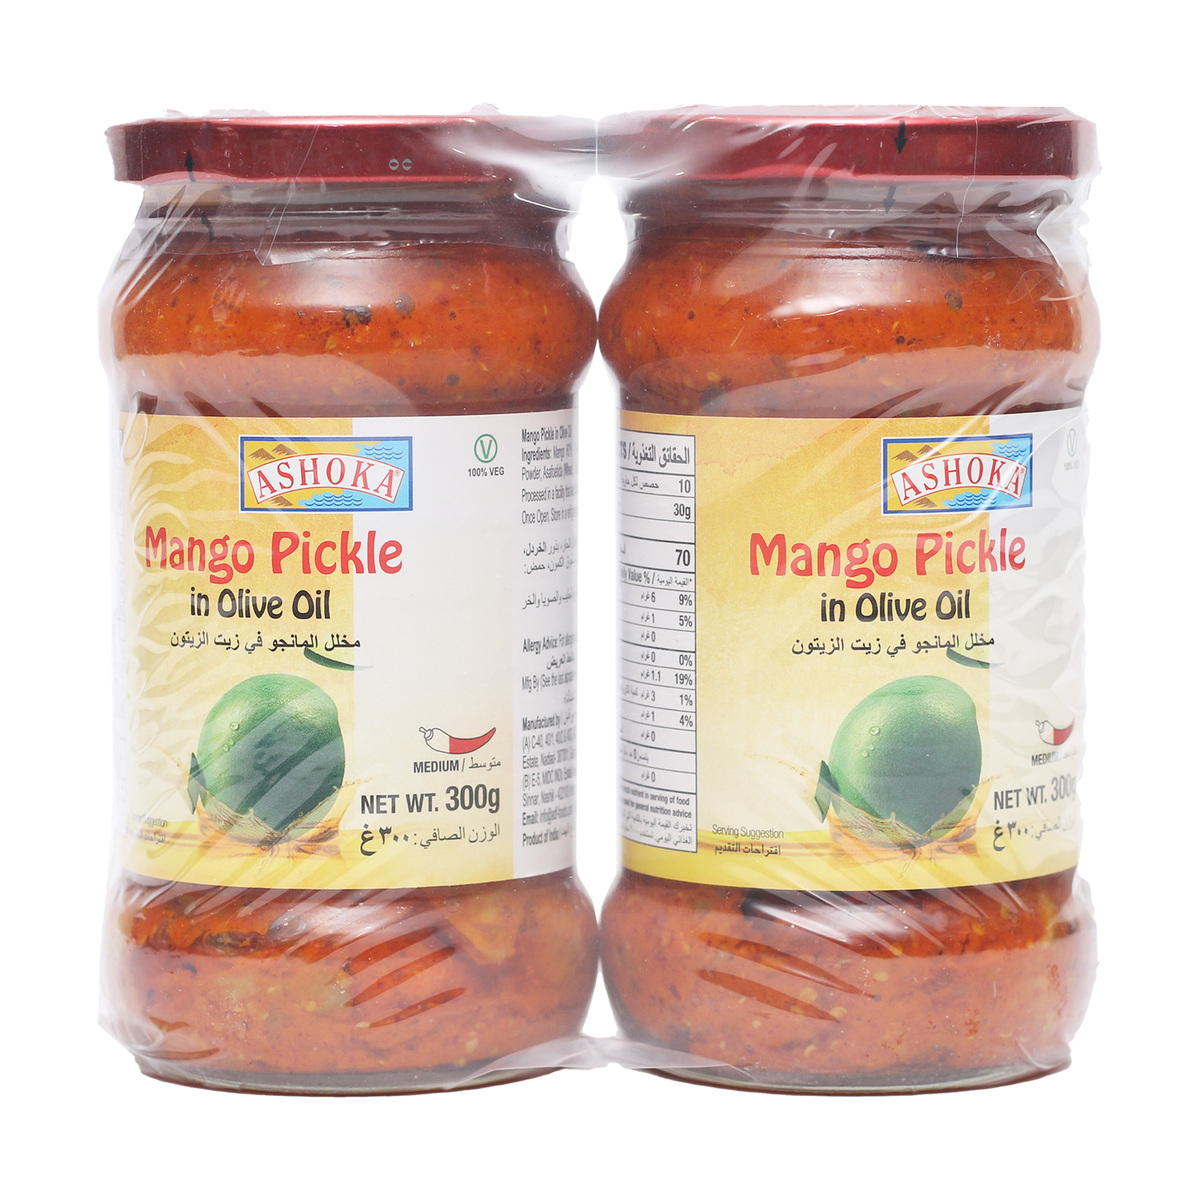 Ashoka Mango Pickle Value Pack 2 x 300 g